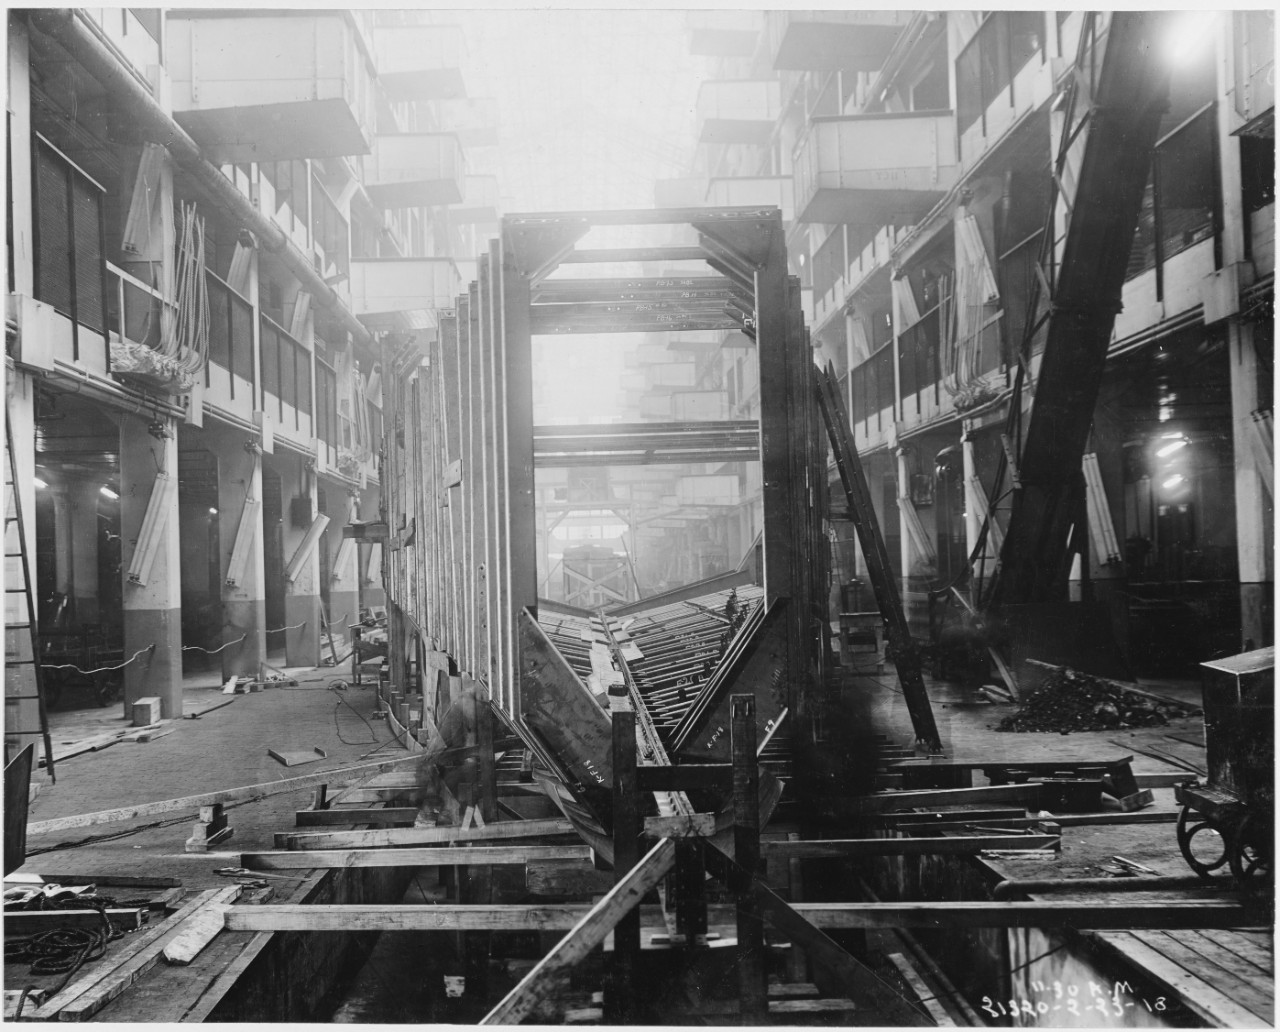 Construction of Ford Eagle Boats, Ford Motor Company, February 23, 1918